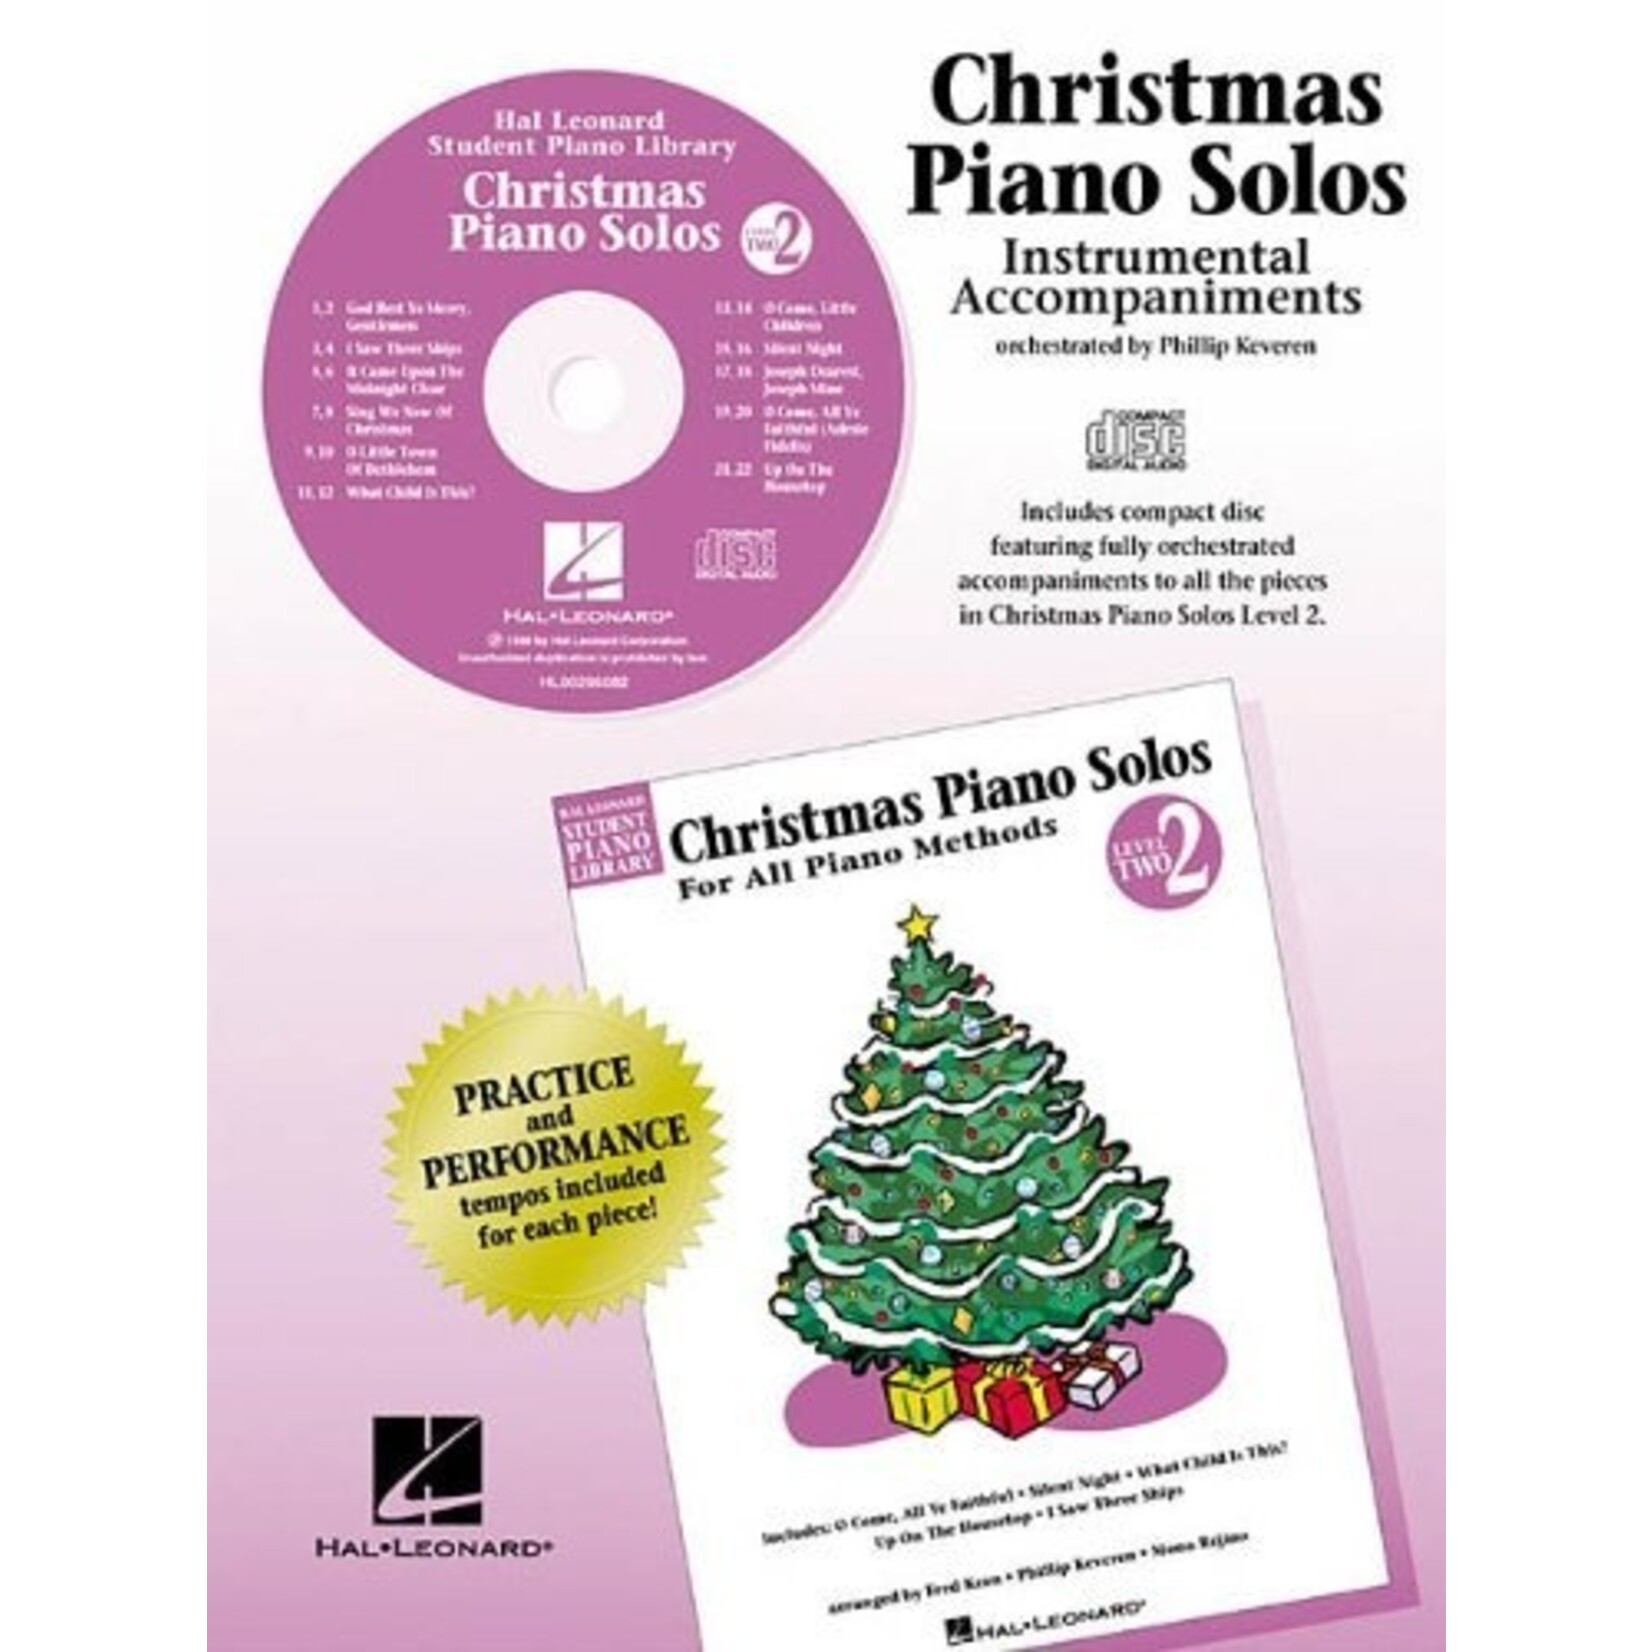 Hal Leonard Student Piano Library Christmas Piano Solos Level 2 Instrumental Accompaniments CD